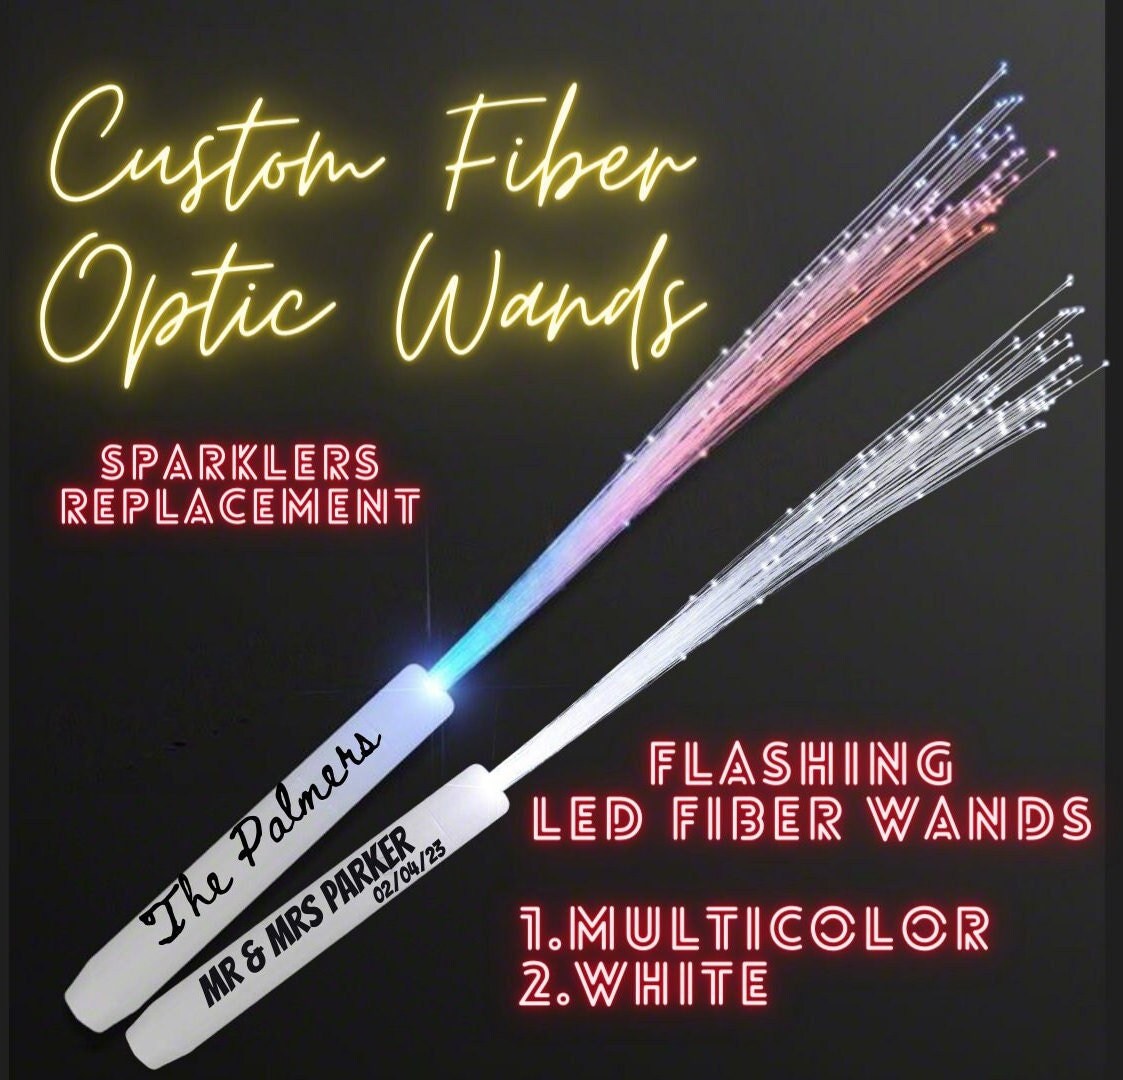 100 Customizable Pack of 16 Inch Multi or Single Color Flashing Glow LED Foam  Sticks, Wands, Batons, Light up LED Foam Stick 